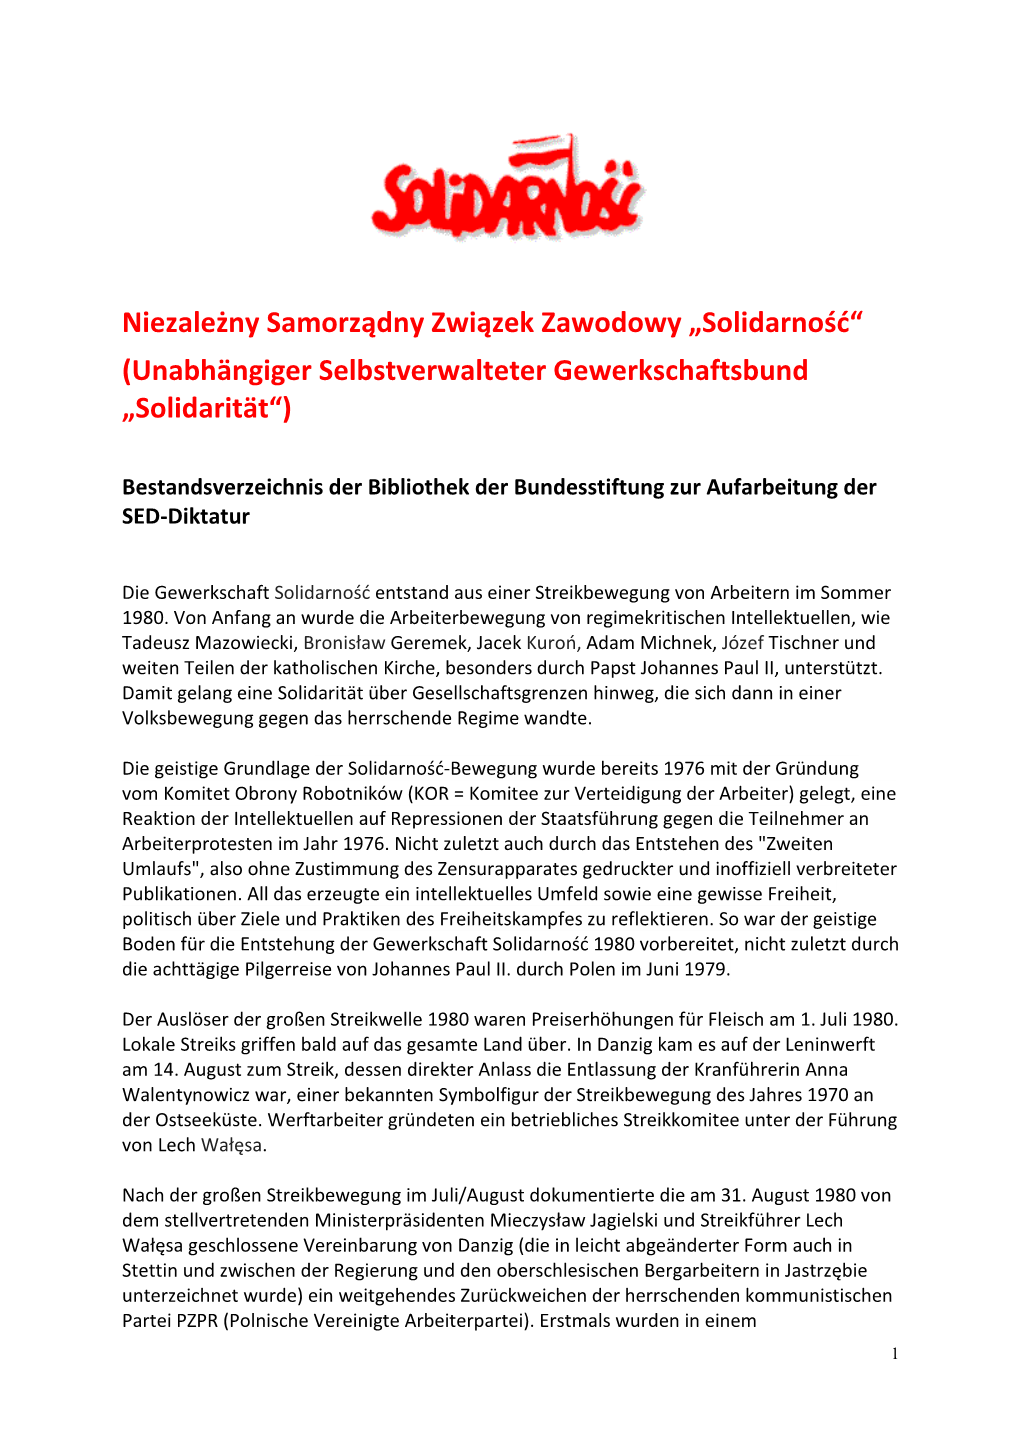 Niezależny Samorządny Związek Zawodowy „Solidarność“ (Unabhängiger Selbstverwalteter Gewerkschaftsbund „Solidarität“)